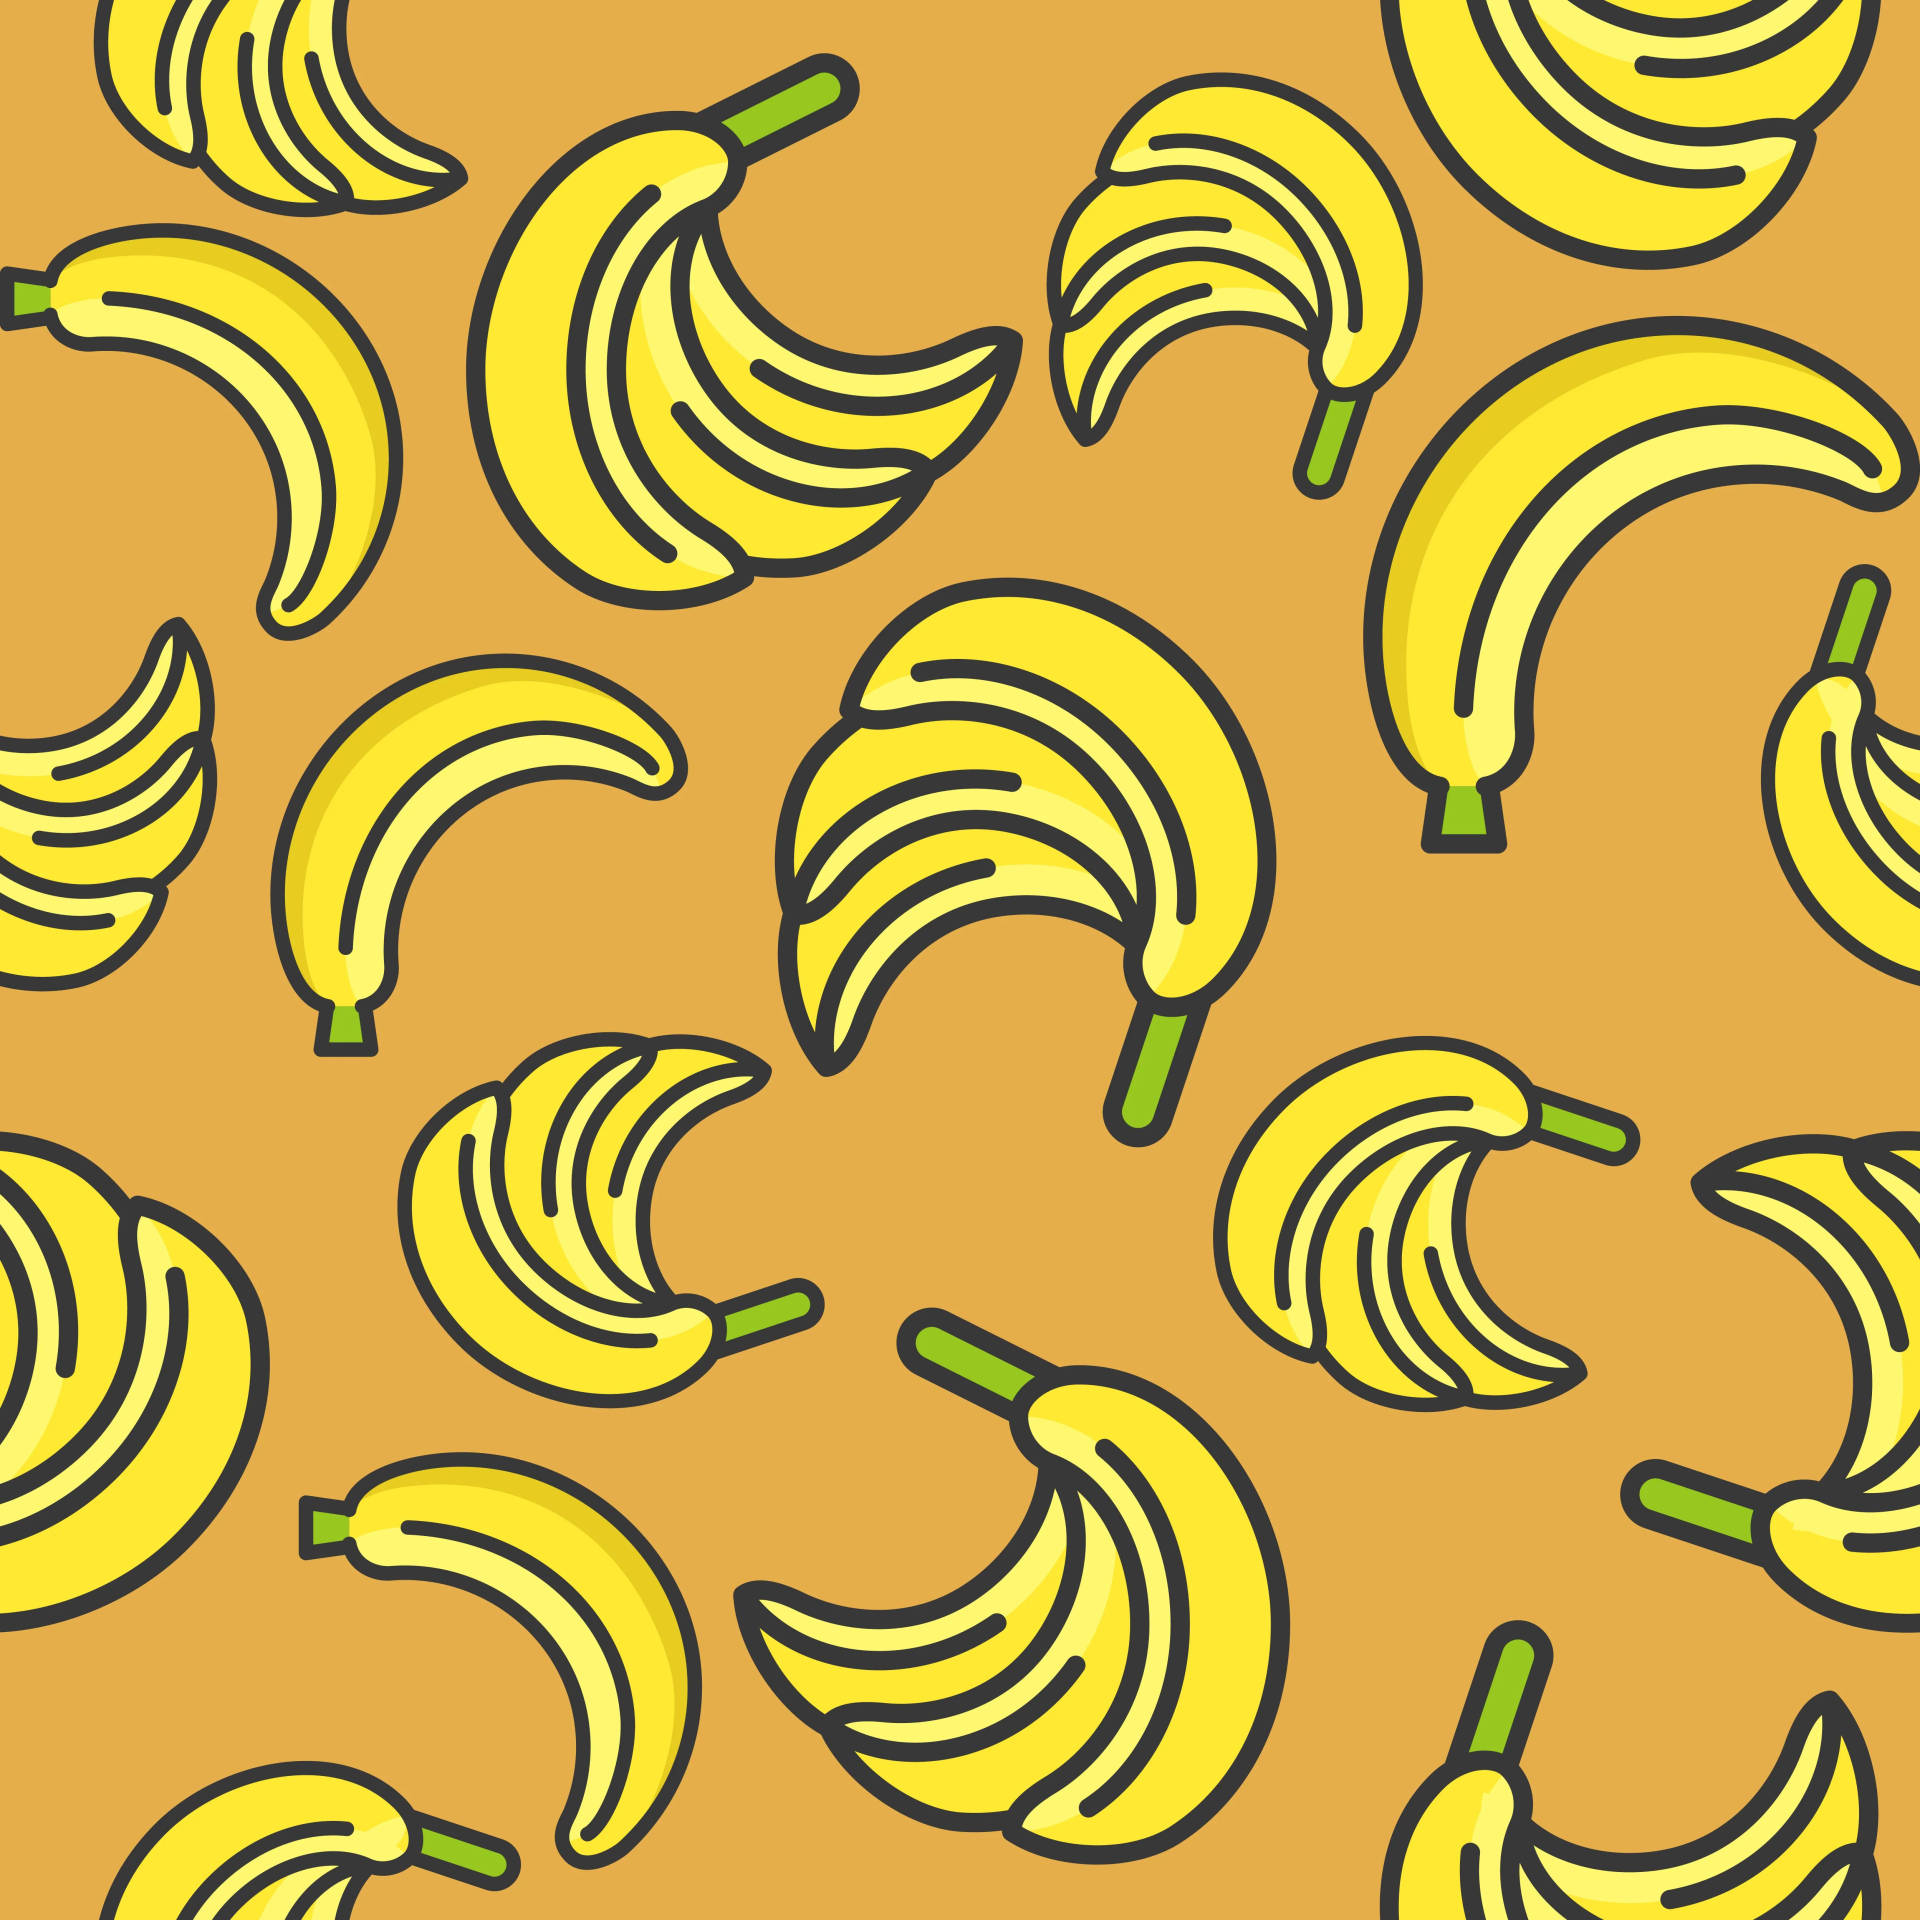 Banana 5000X5000 Wallpaper and Background Image